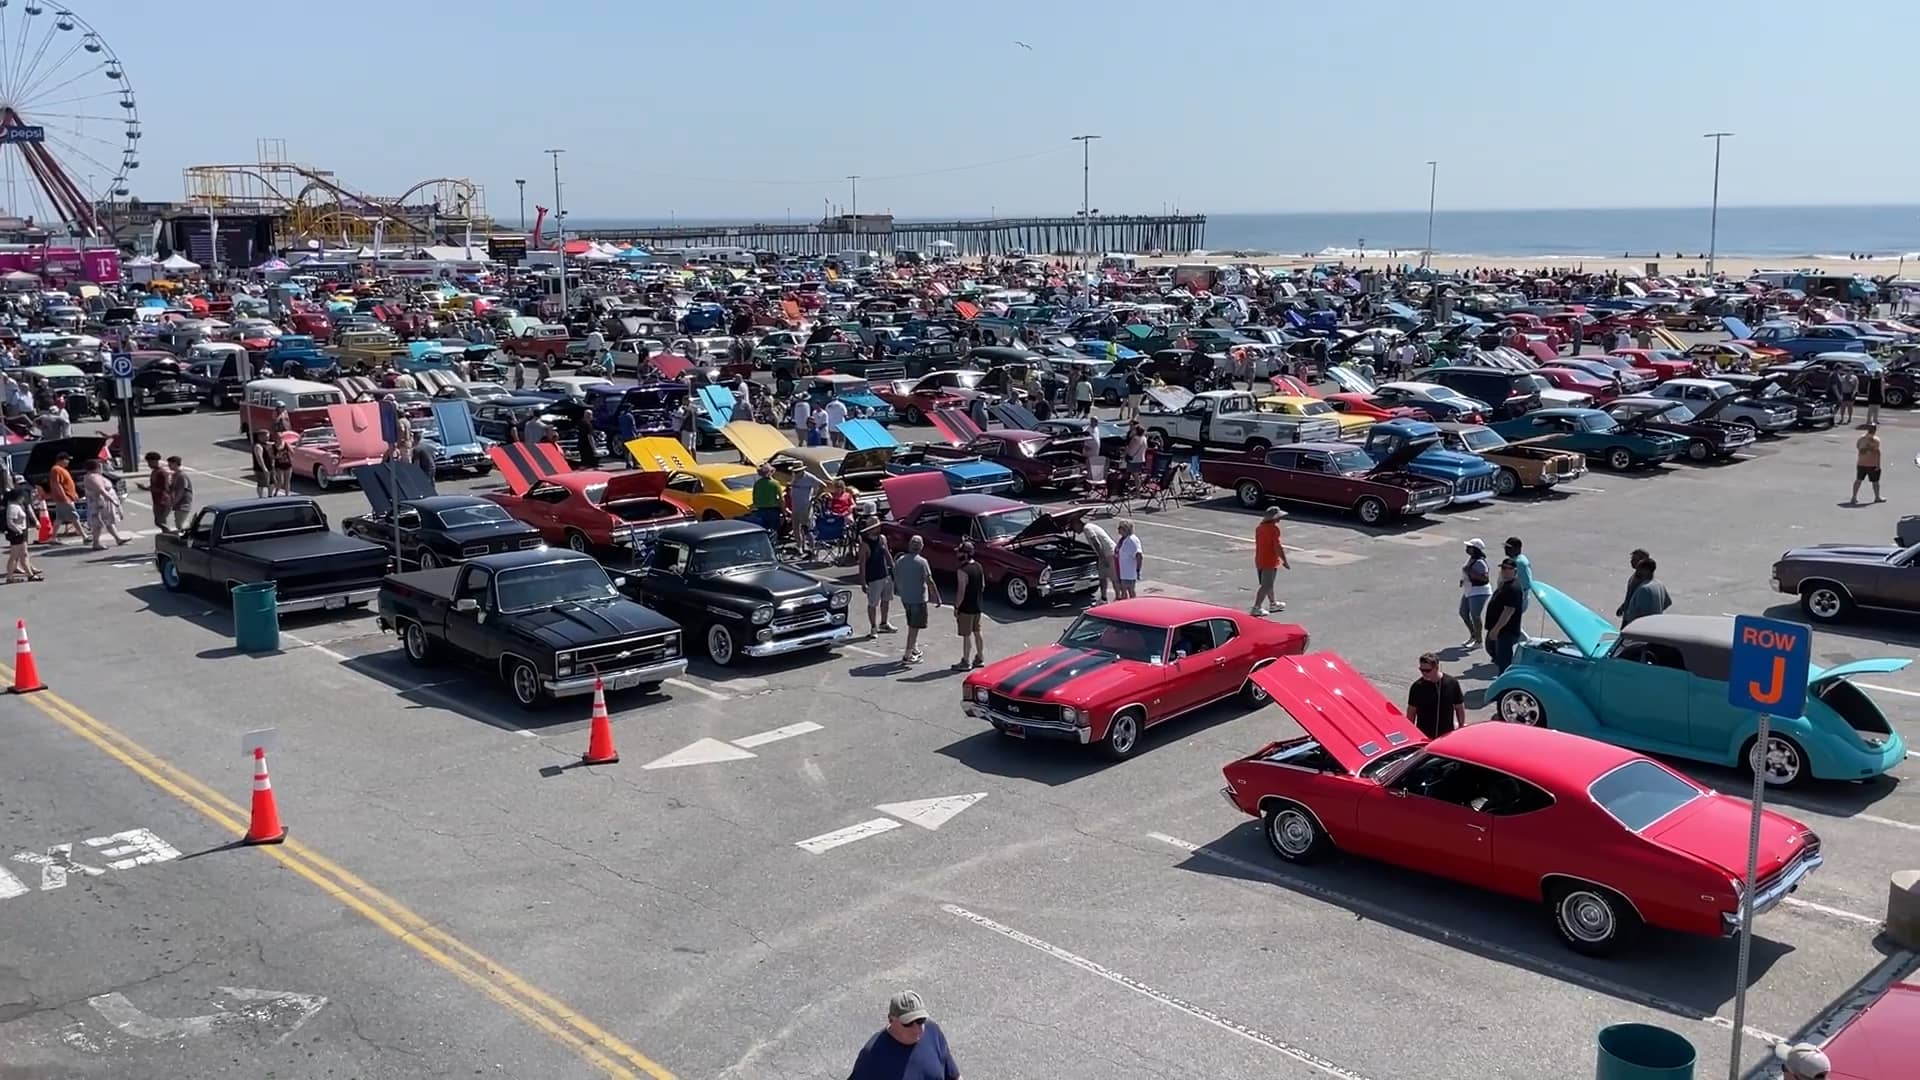 Ocean City Car Show All Chevy Performance on Vimeo